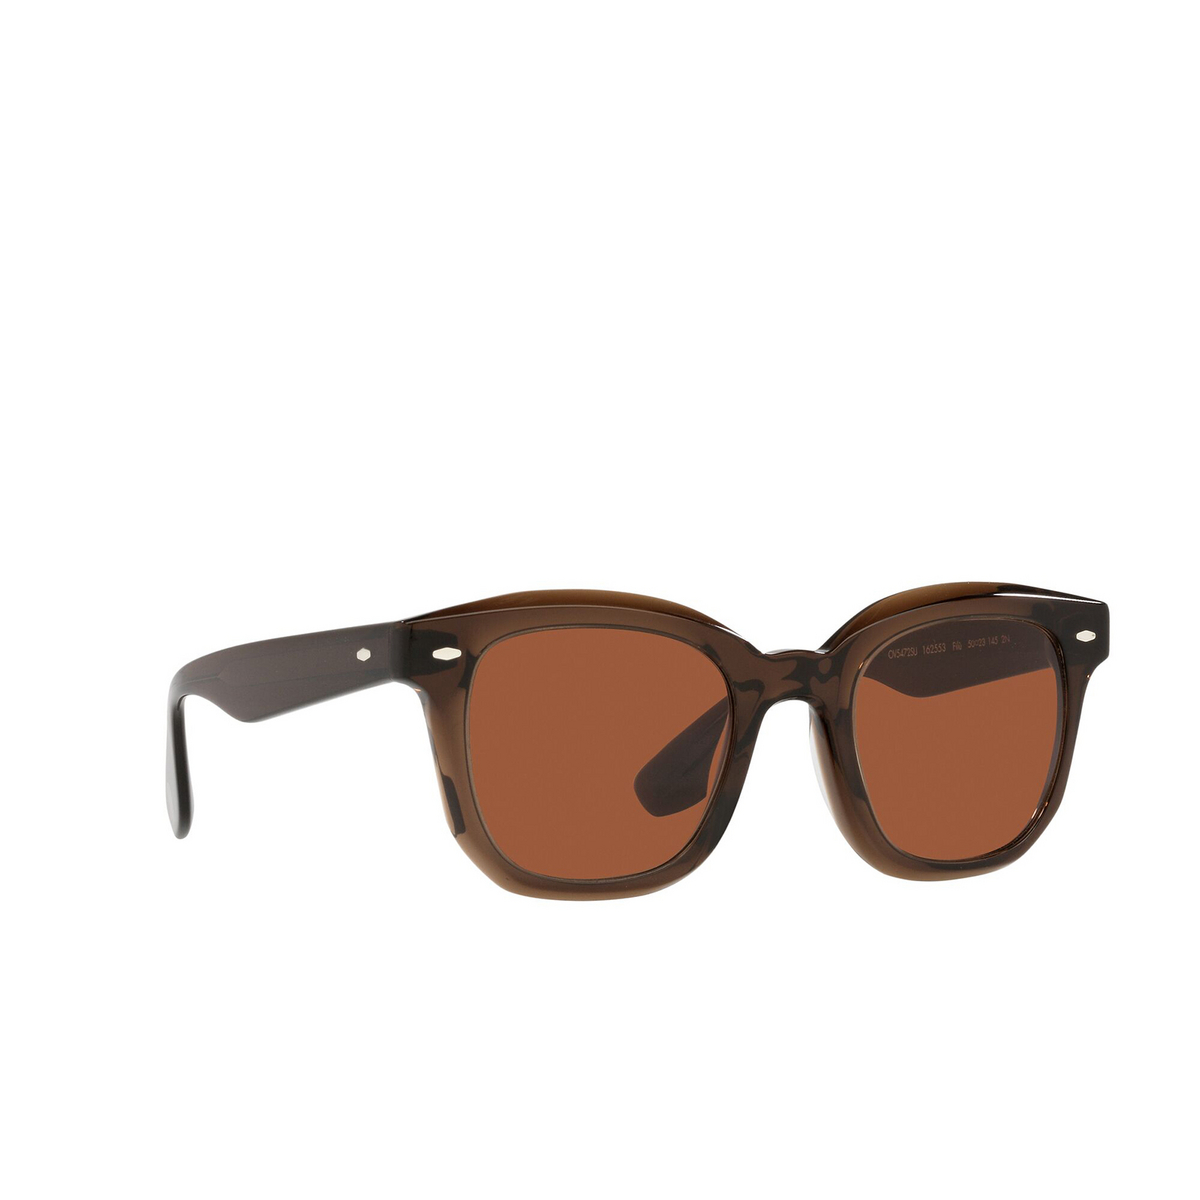 Oliver Peoples® Square Sunglasses: Filu' OV5472SU color Espresso 162553 - three-quarters view.